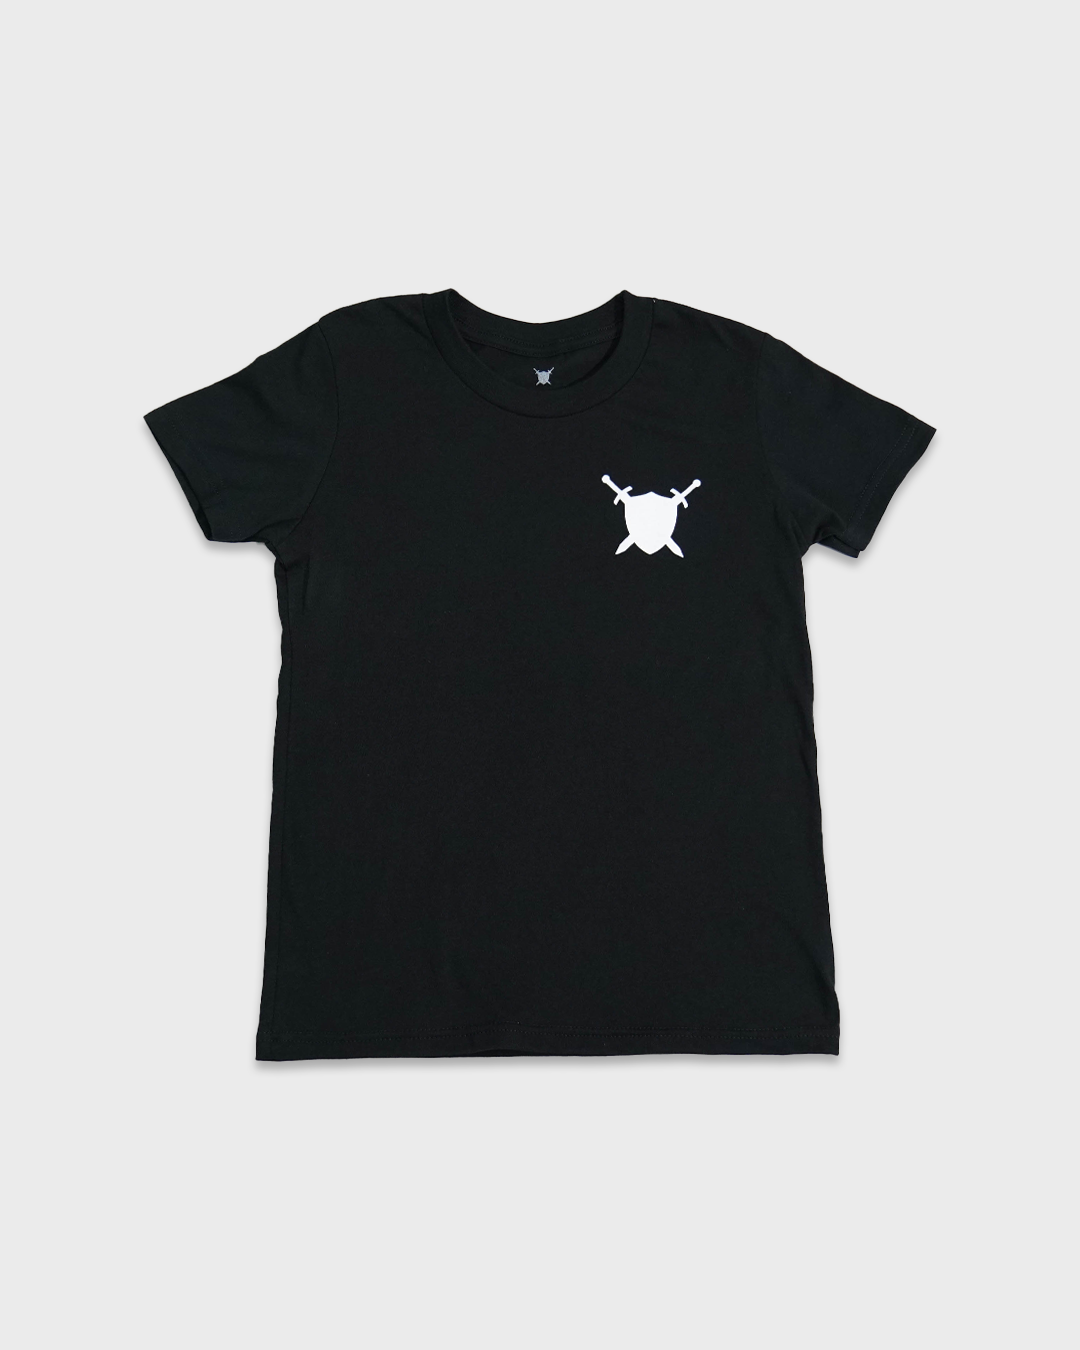 STAFF T-Shirt (Youth)